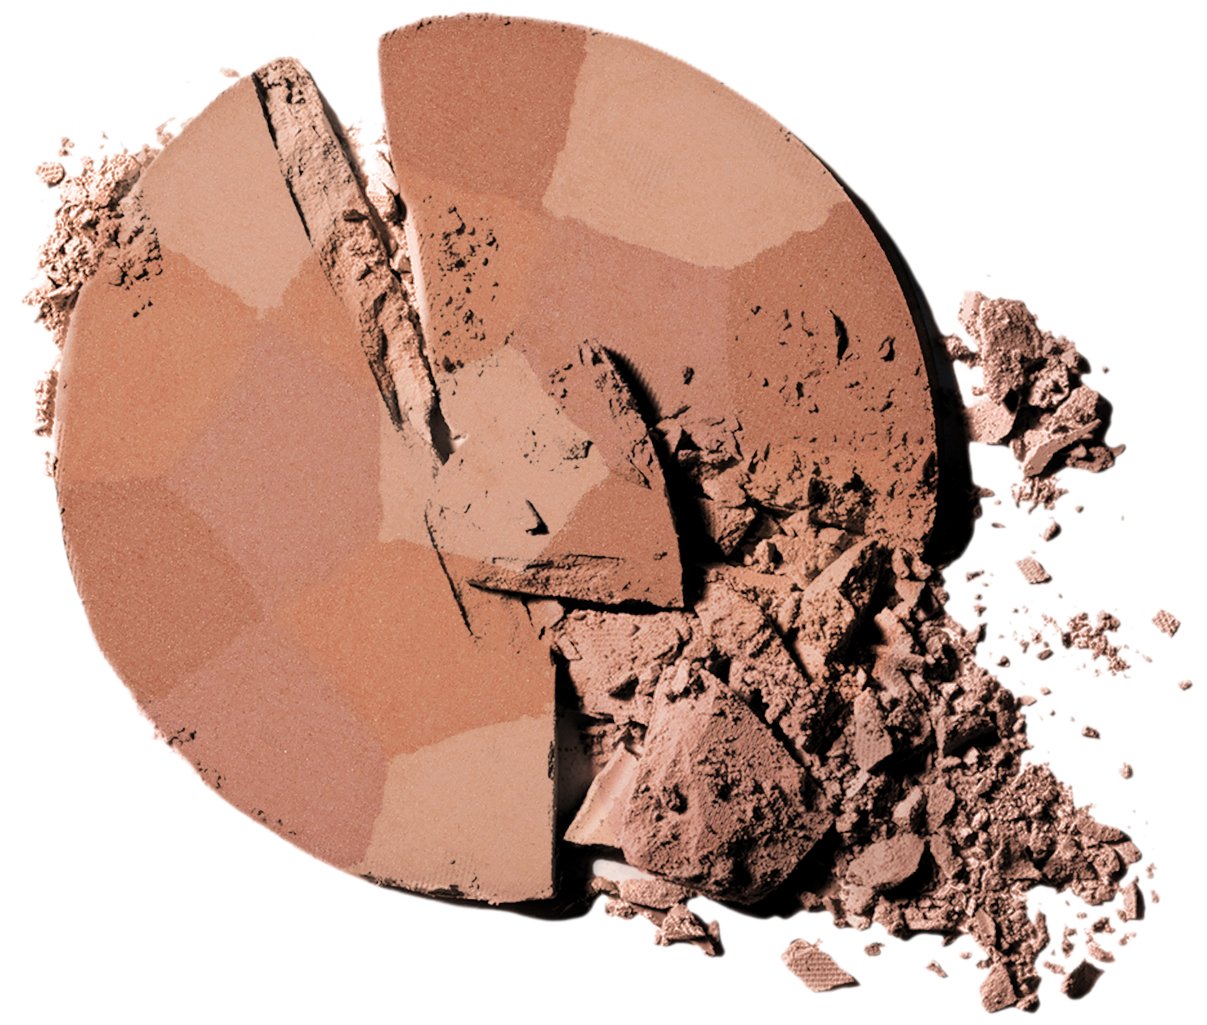 Physicians Formula Powder Palette Multi-Colored Blush Powder Blushing Natural, Dermatologist Tested